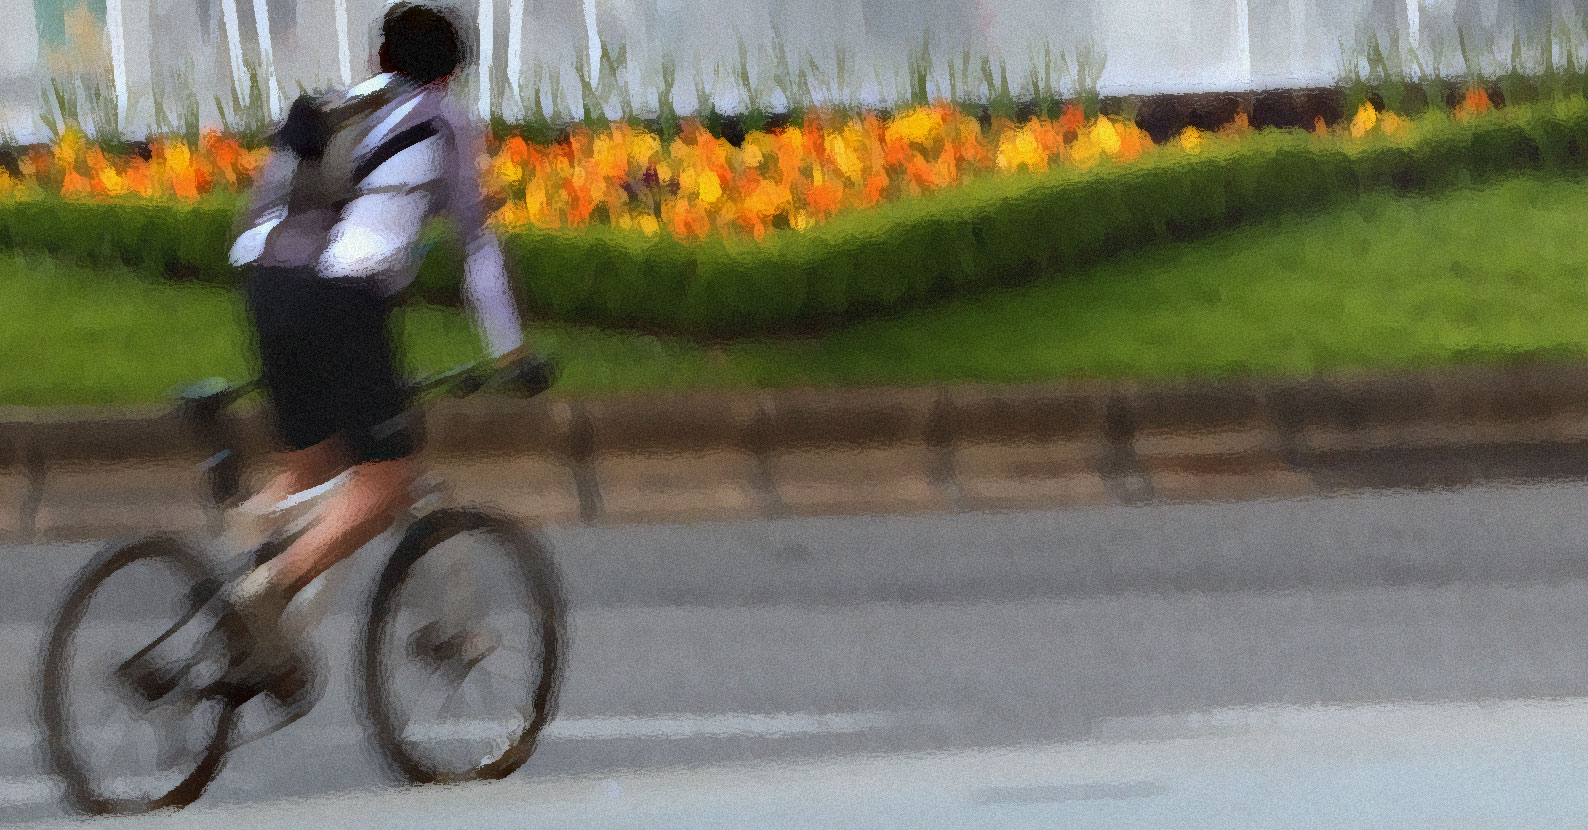 Ciclista